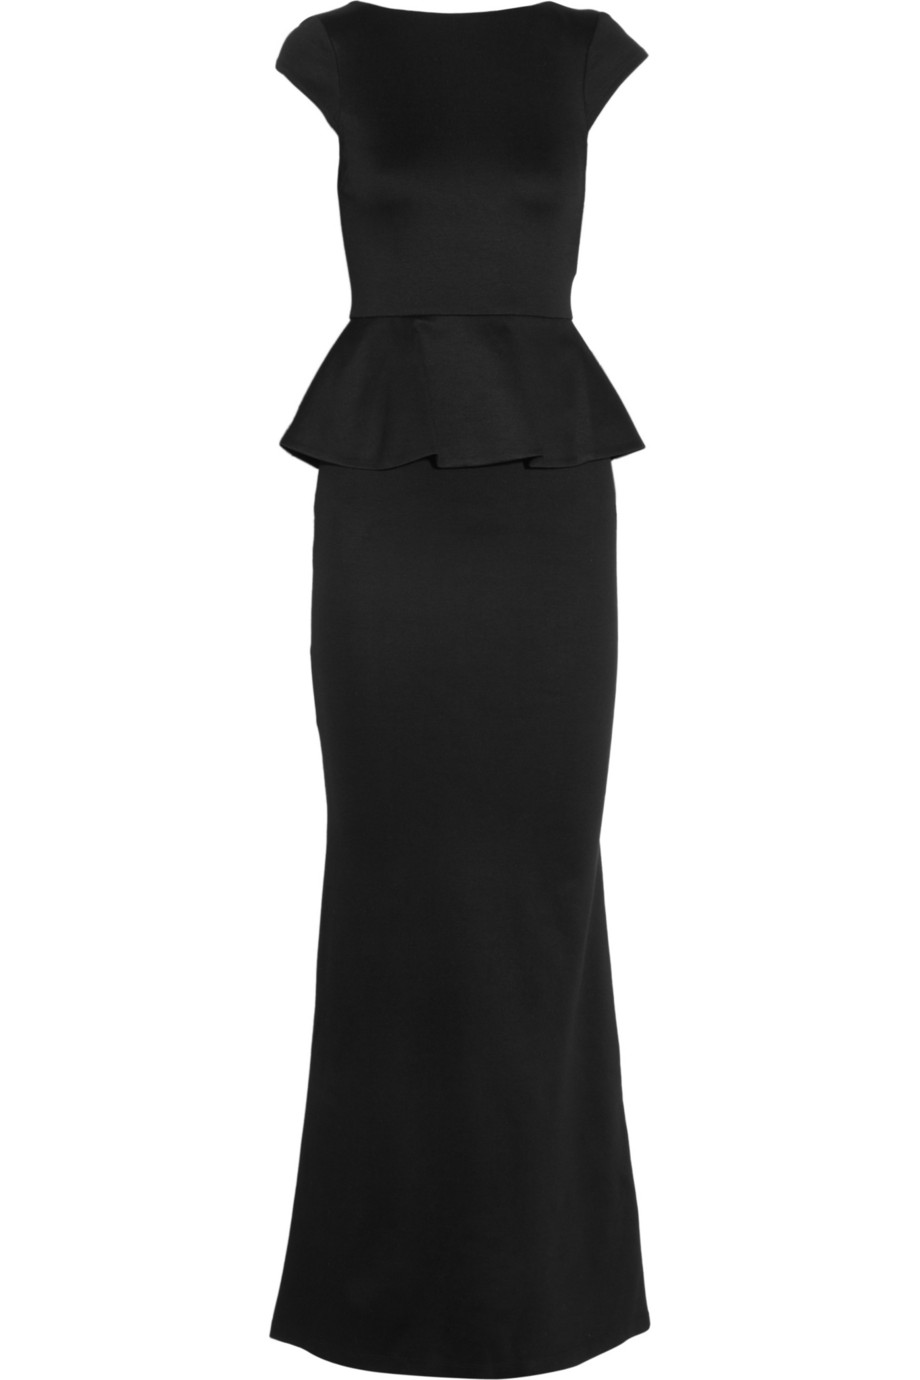 Alice + Olivia Woven Jersey Peplum Maxi Dress in Black | Lyst